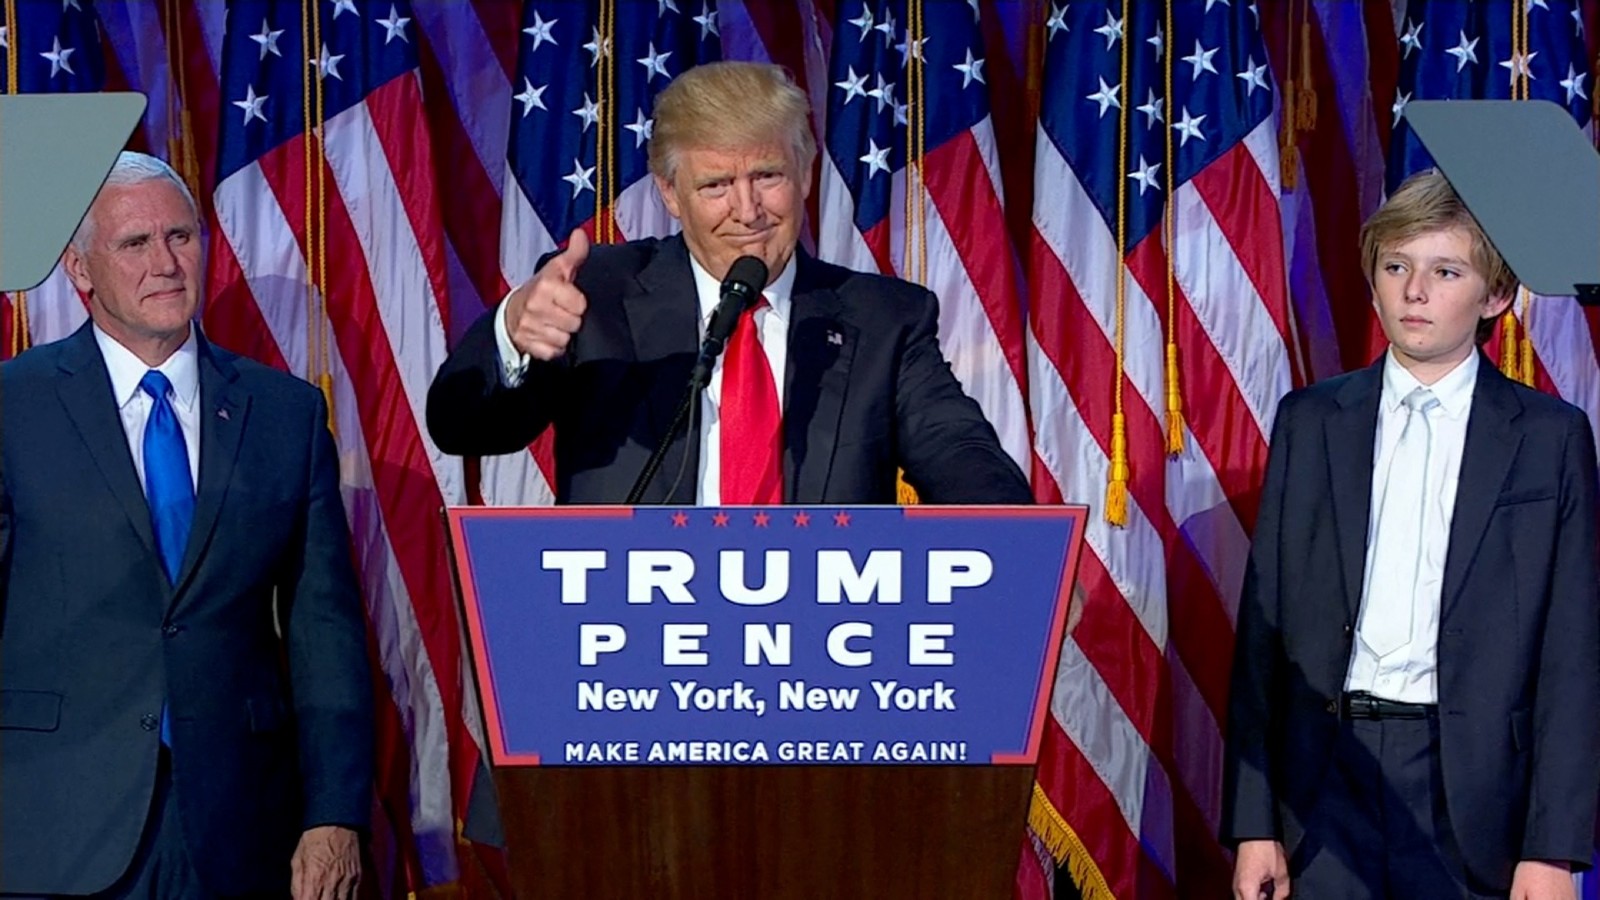 Donald Trumps Victory Speech Full Text Cnnpolitics